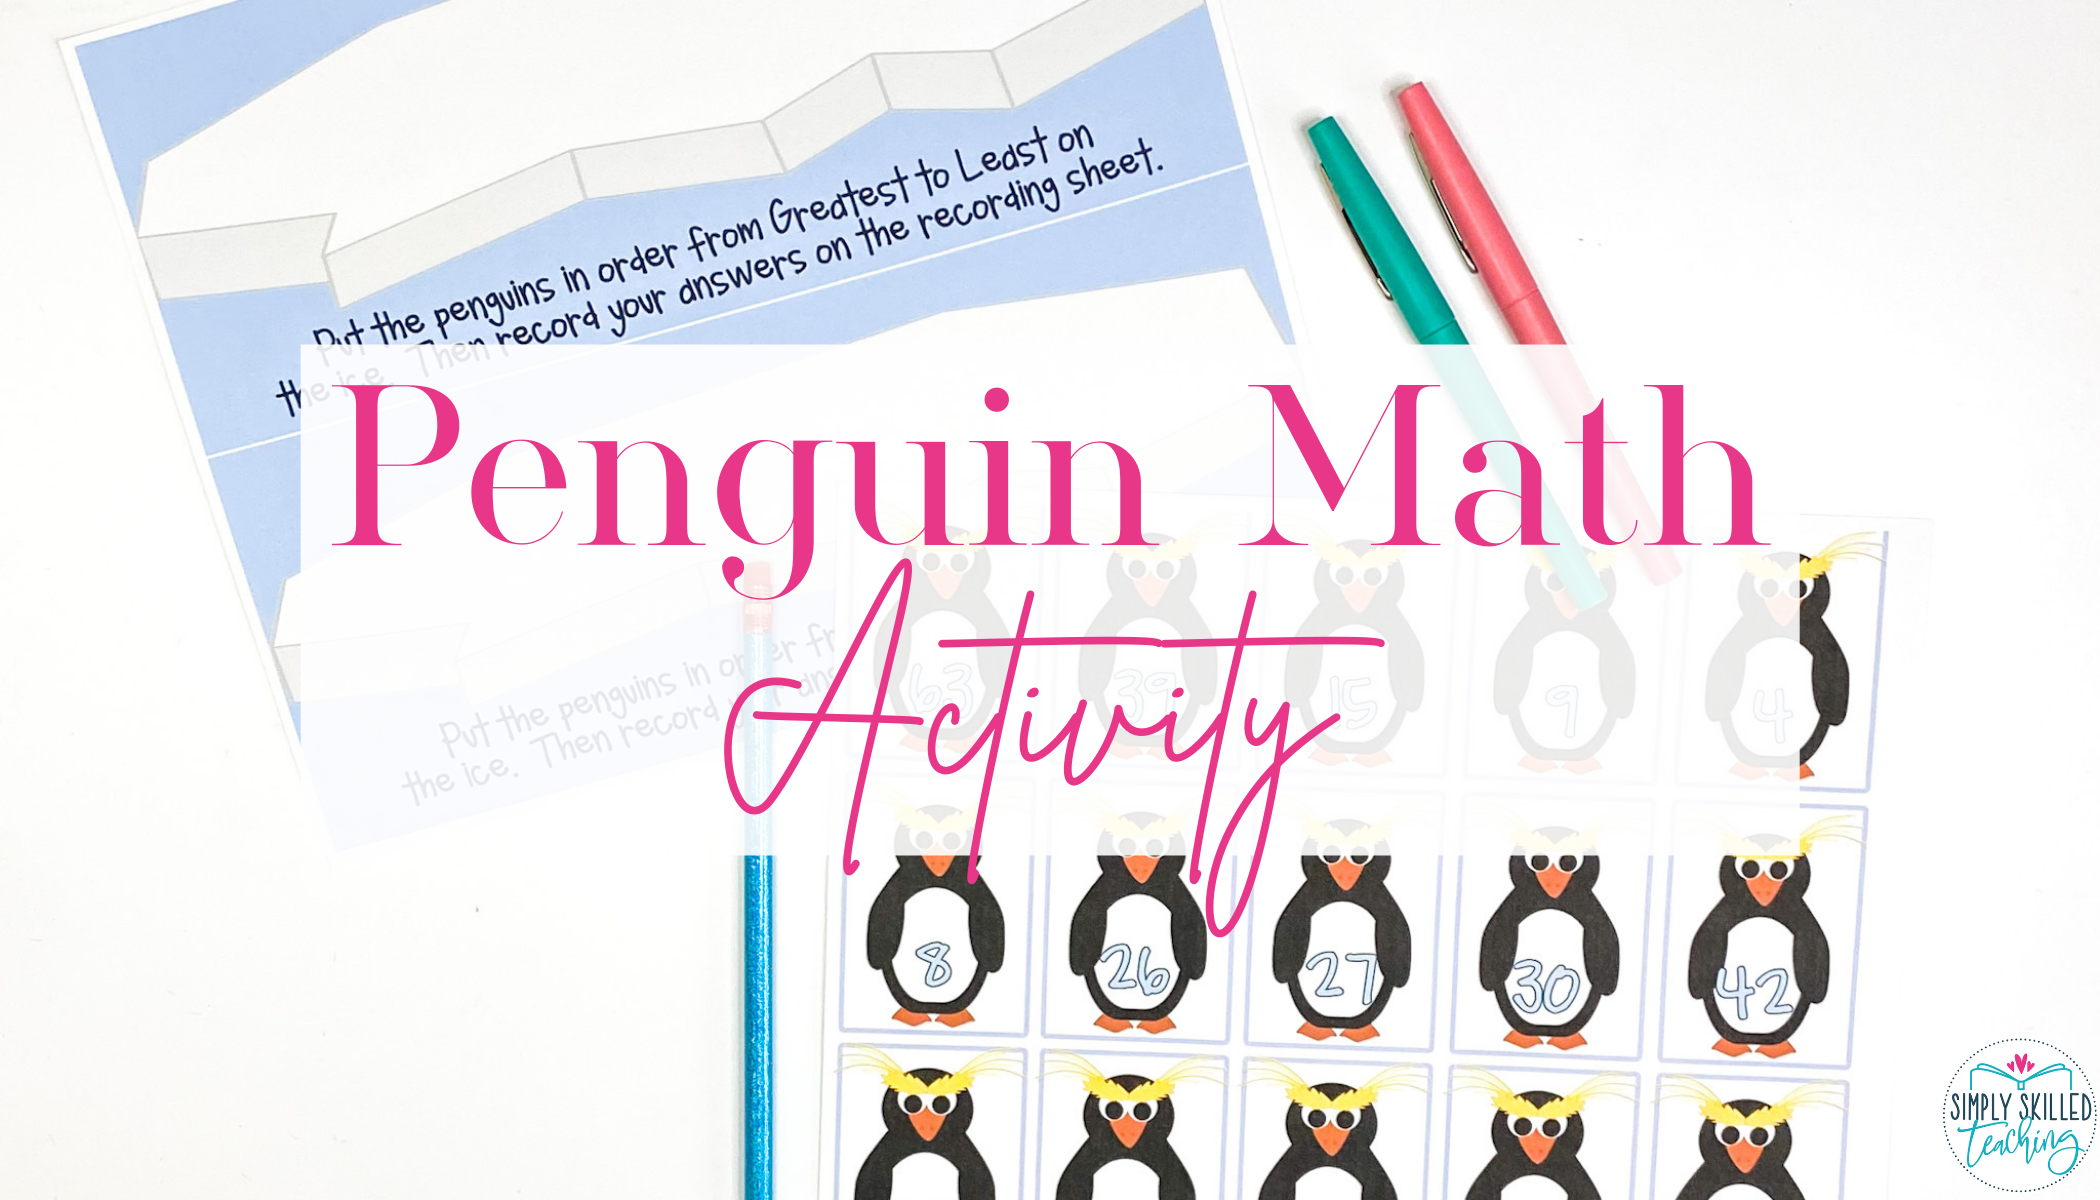 Penguin-Math-Activity-Featured-Image